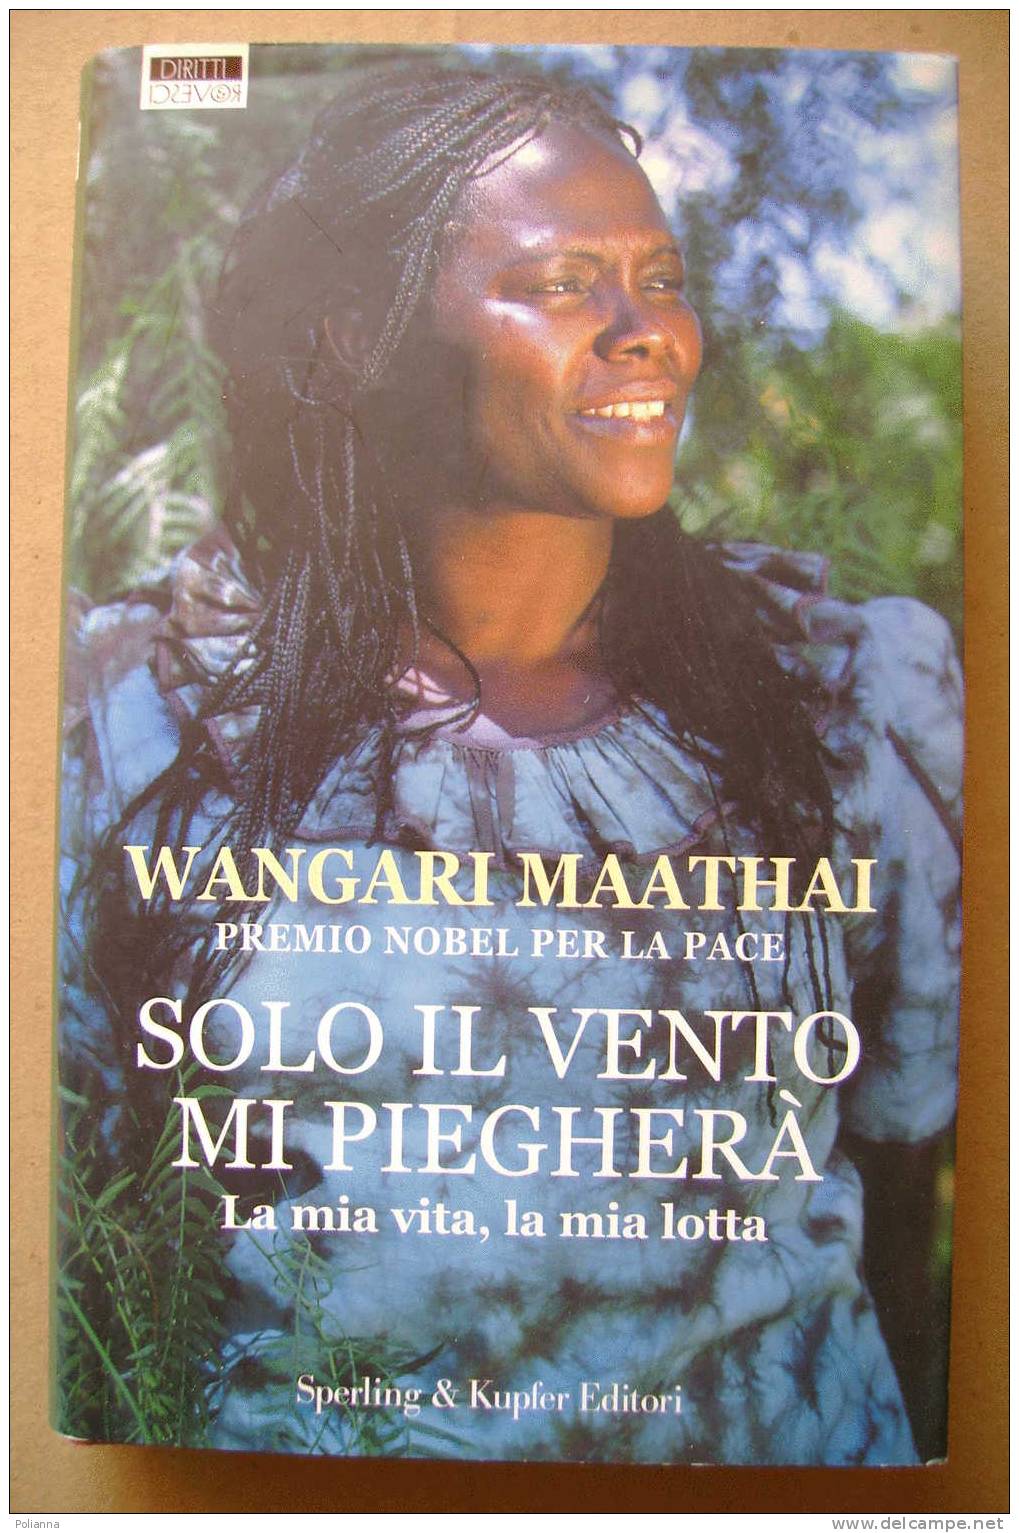 PDC/9 Wangari Maathai SOLO IL VENTO MI PIEGHERA' Sperling & Kupfer 2007/Africa/Kenya - History, Biography, Philosophy